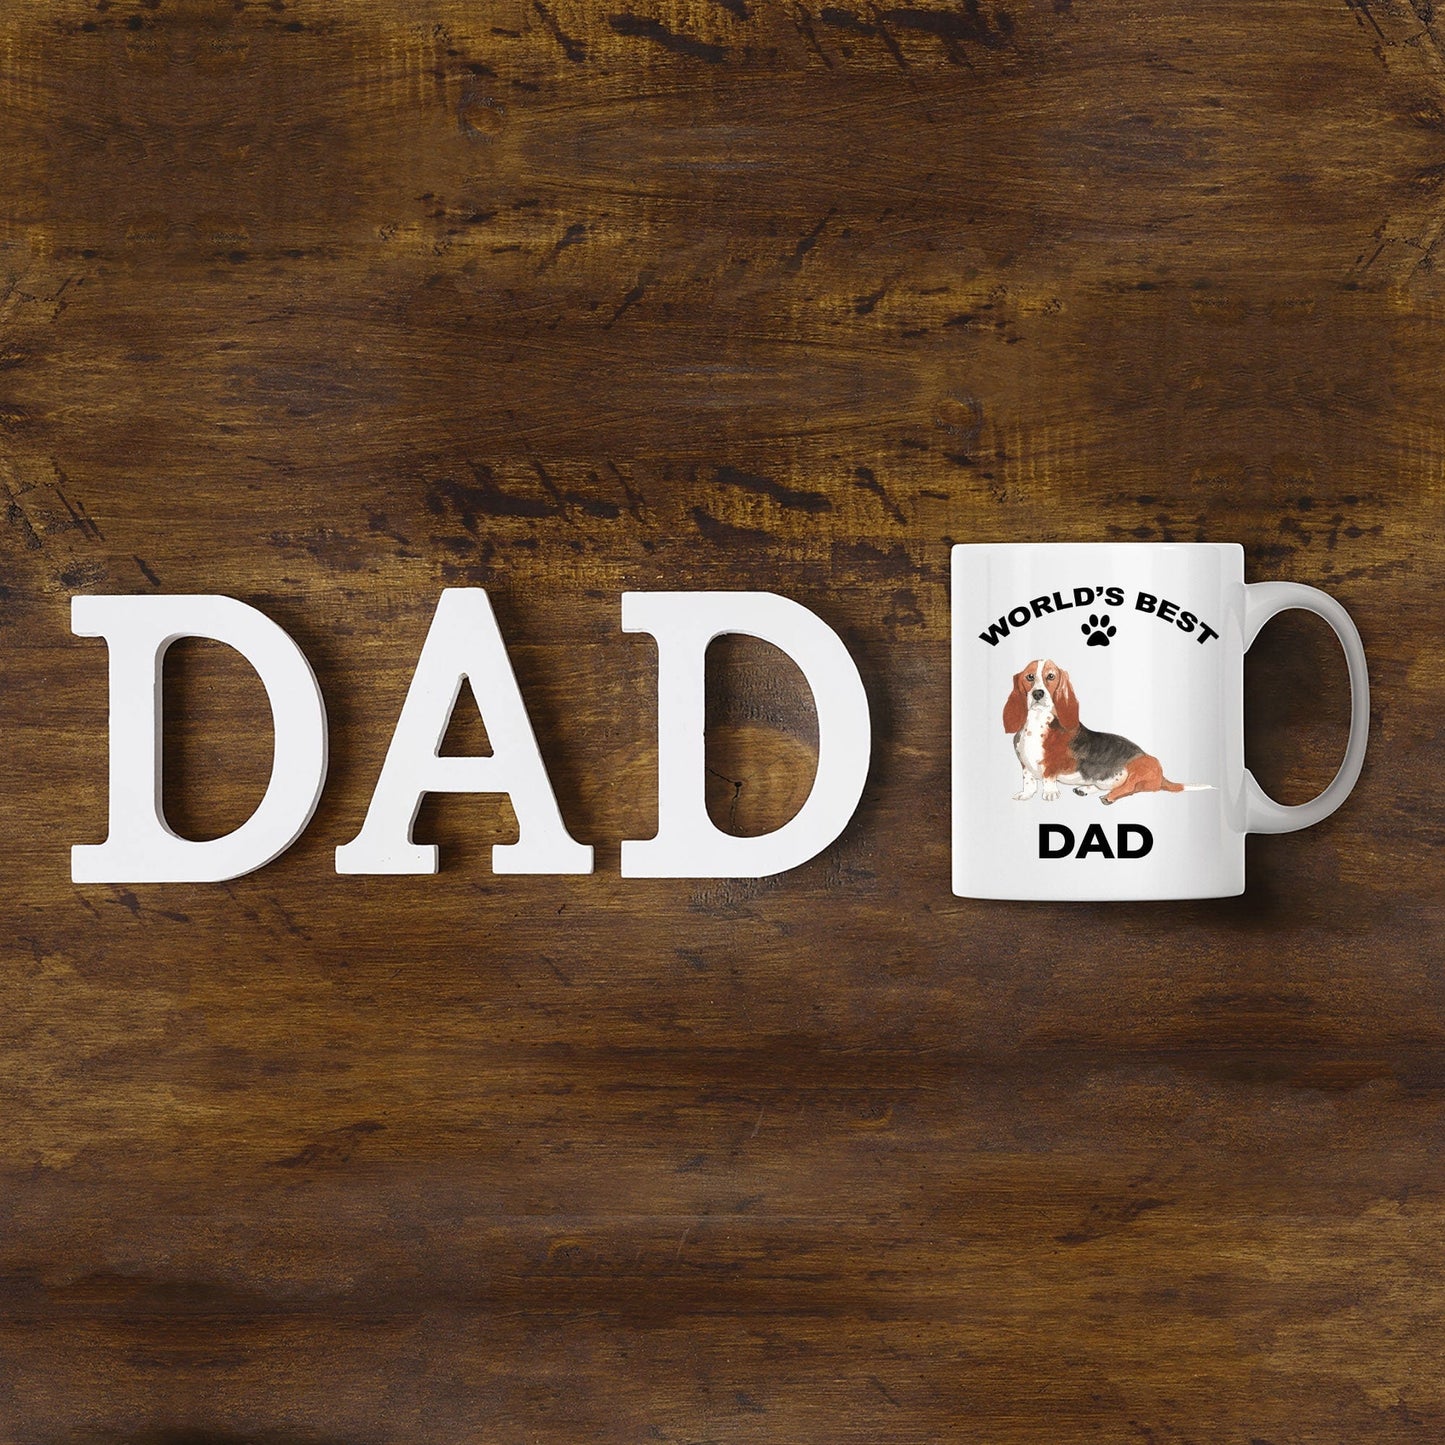 Basset Hound Best Dad Watercolor Print Coffee Mug